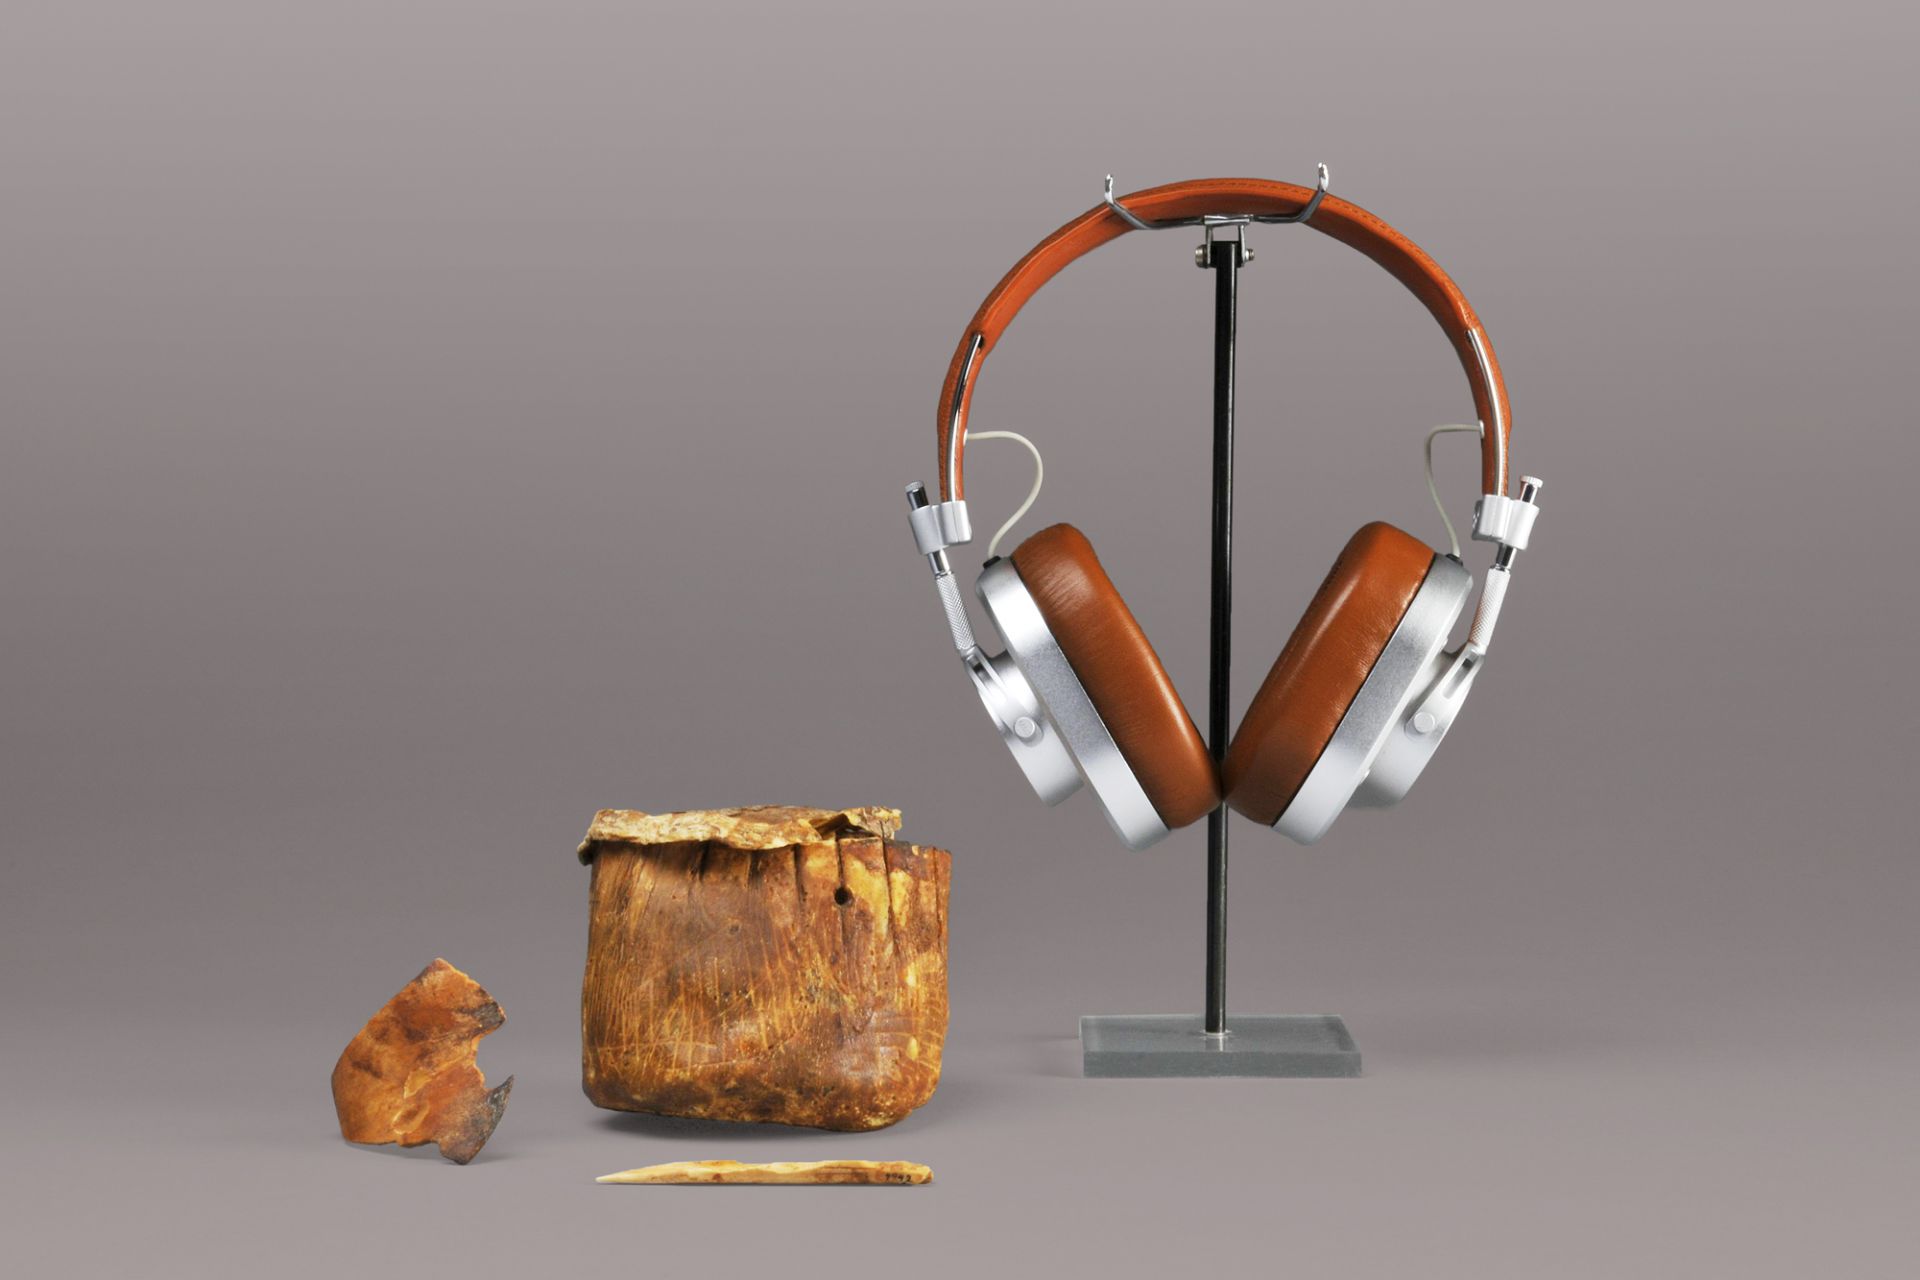 Rawhide vessel, Egypt, 4th millennium BCE and headphones, Master & Dynamic, New York, 2014